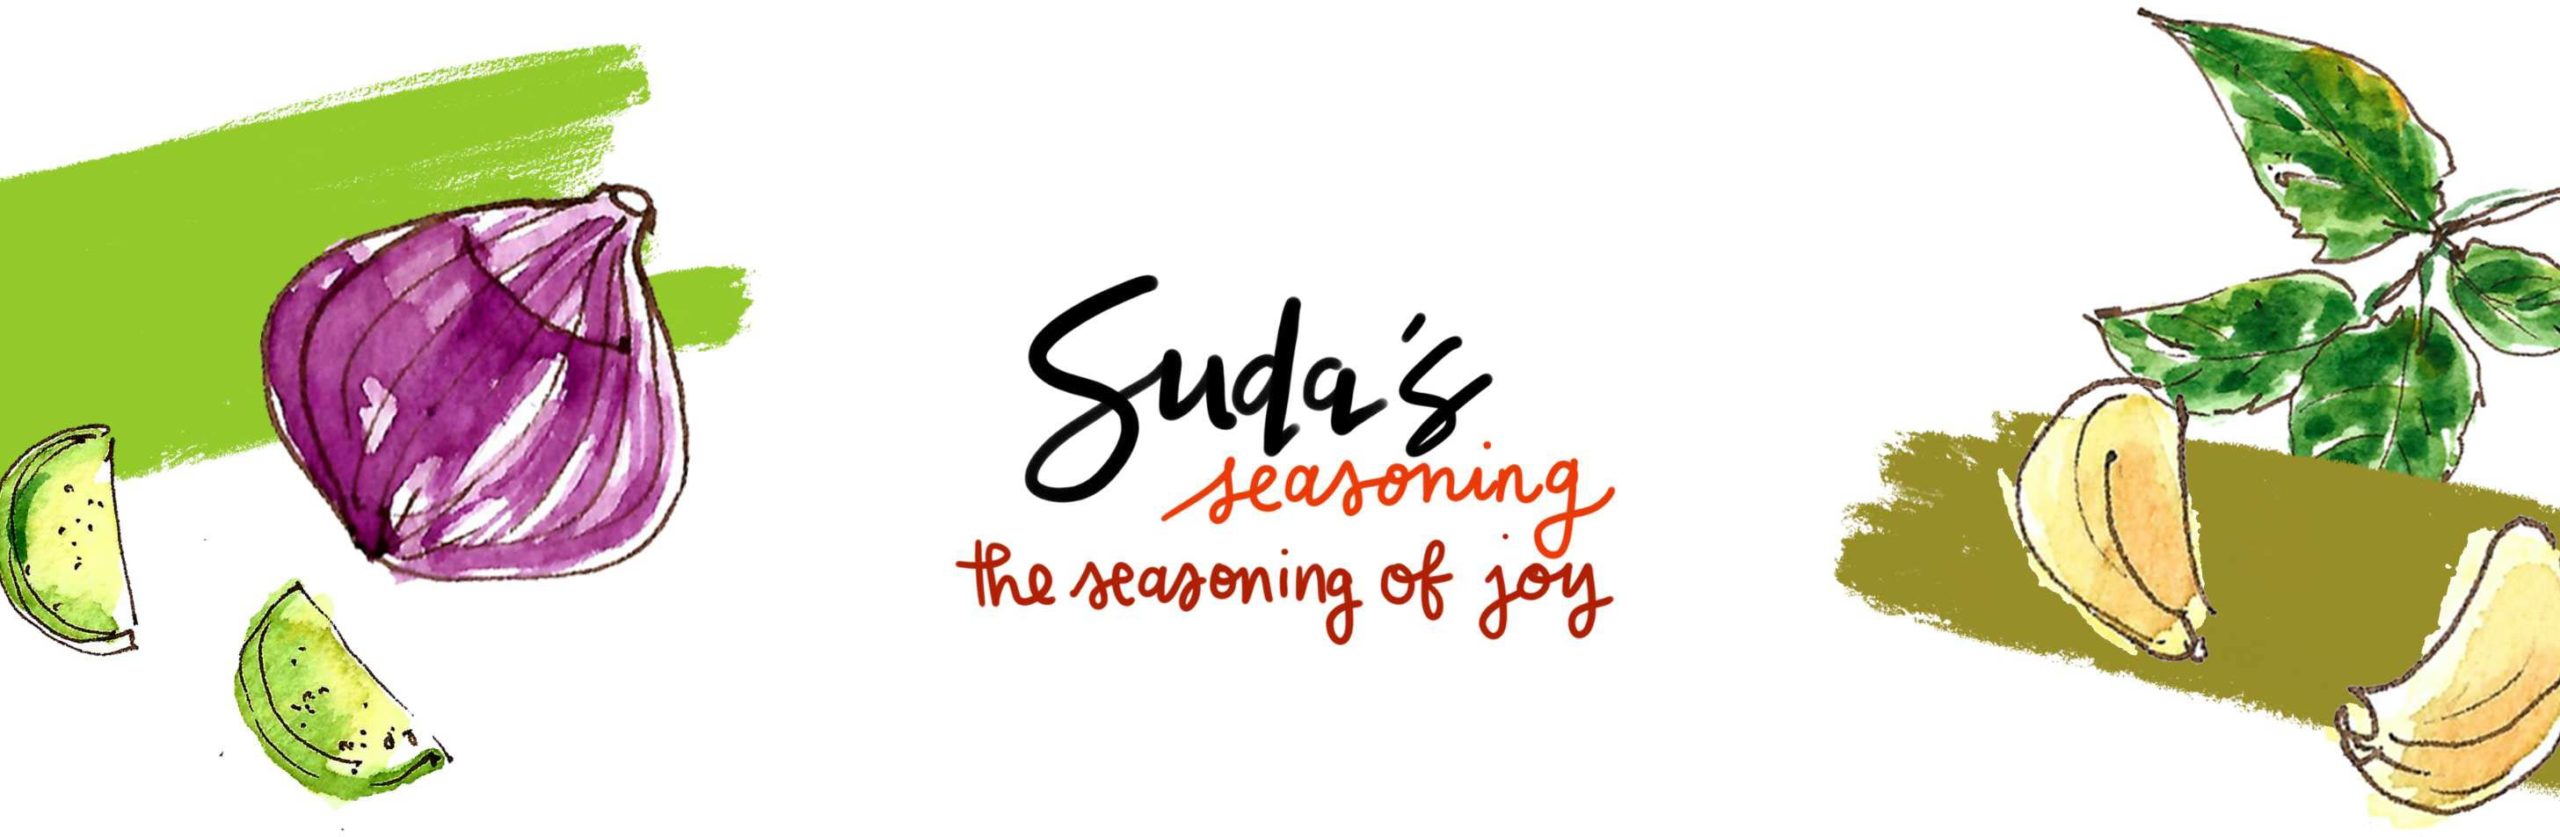 Suda's Seasoning Logo banner